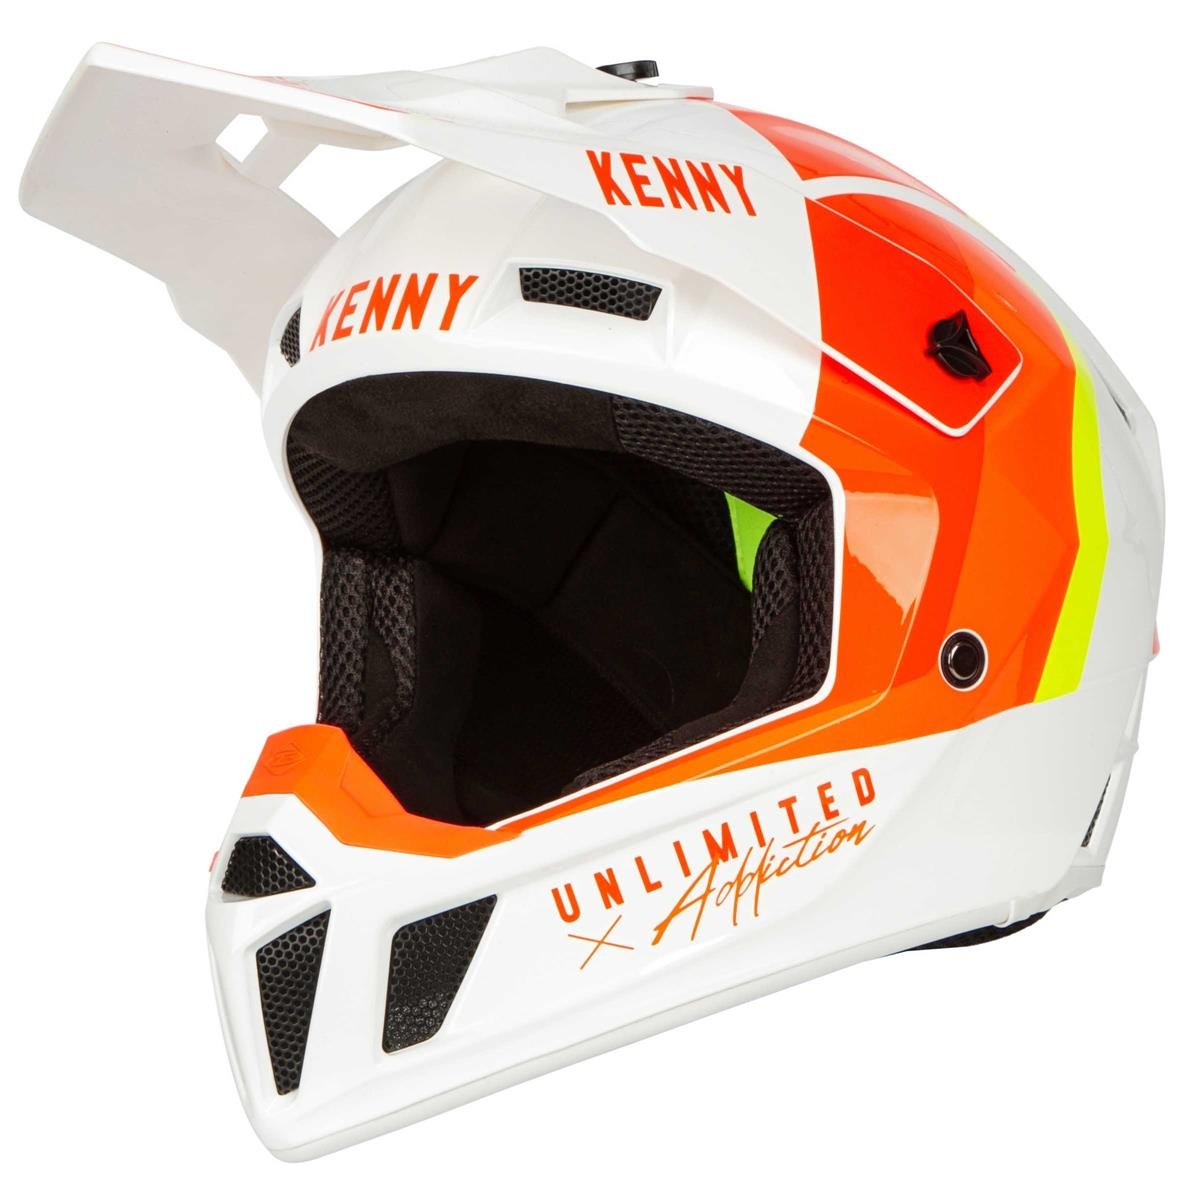 Kenny MX Helmet Performance Graphic White/Red/Orange